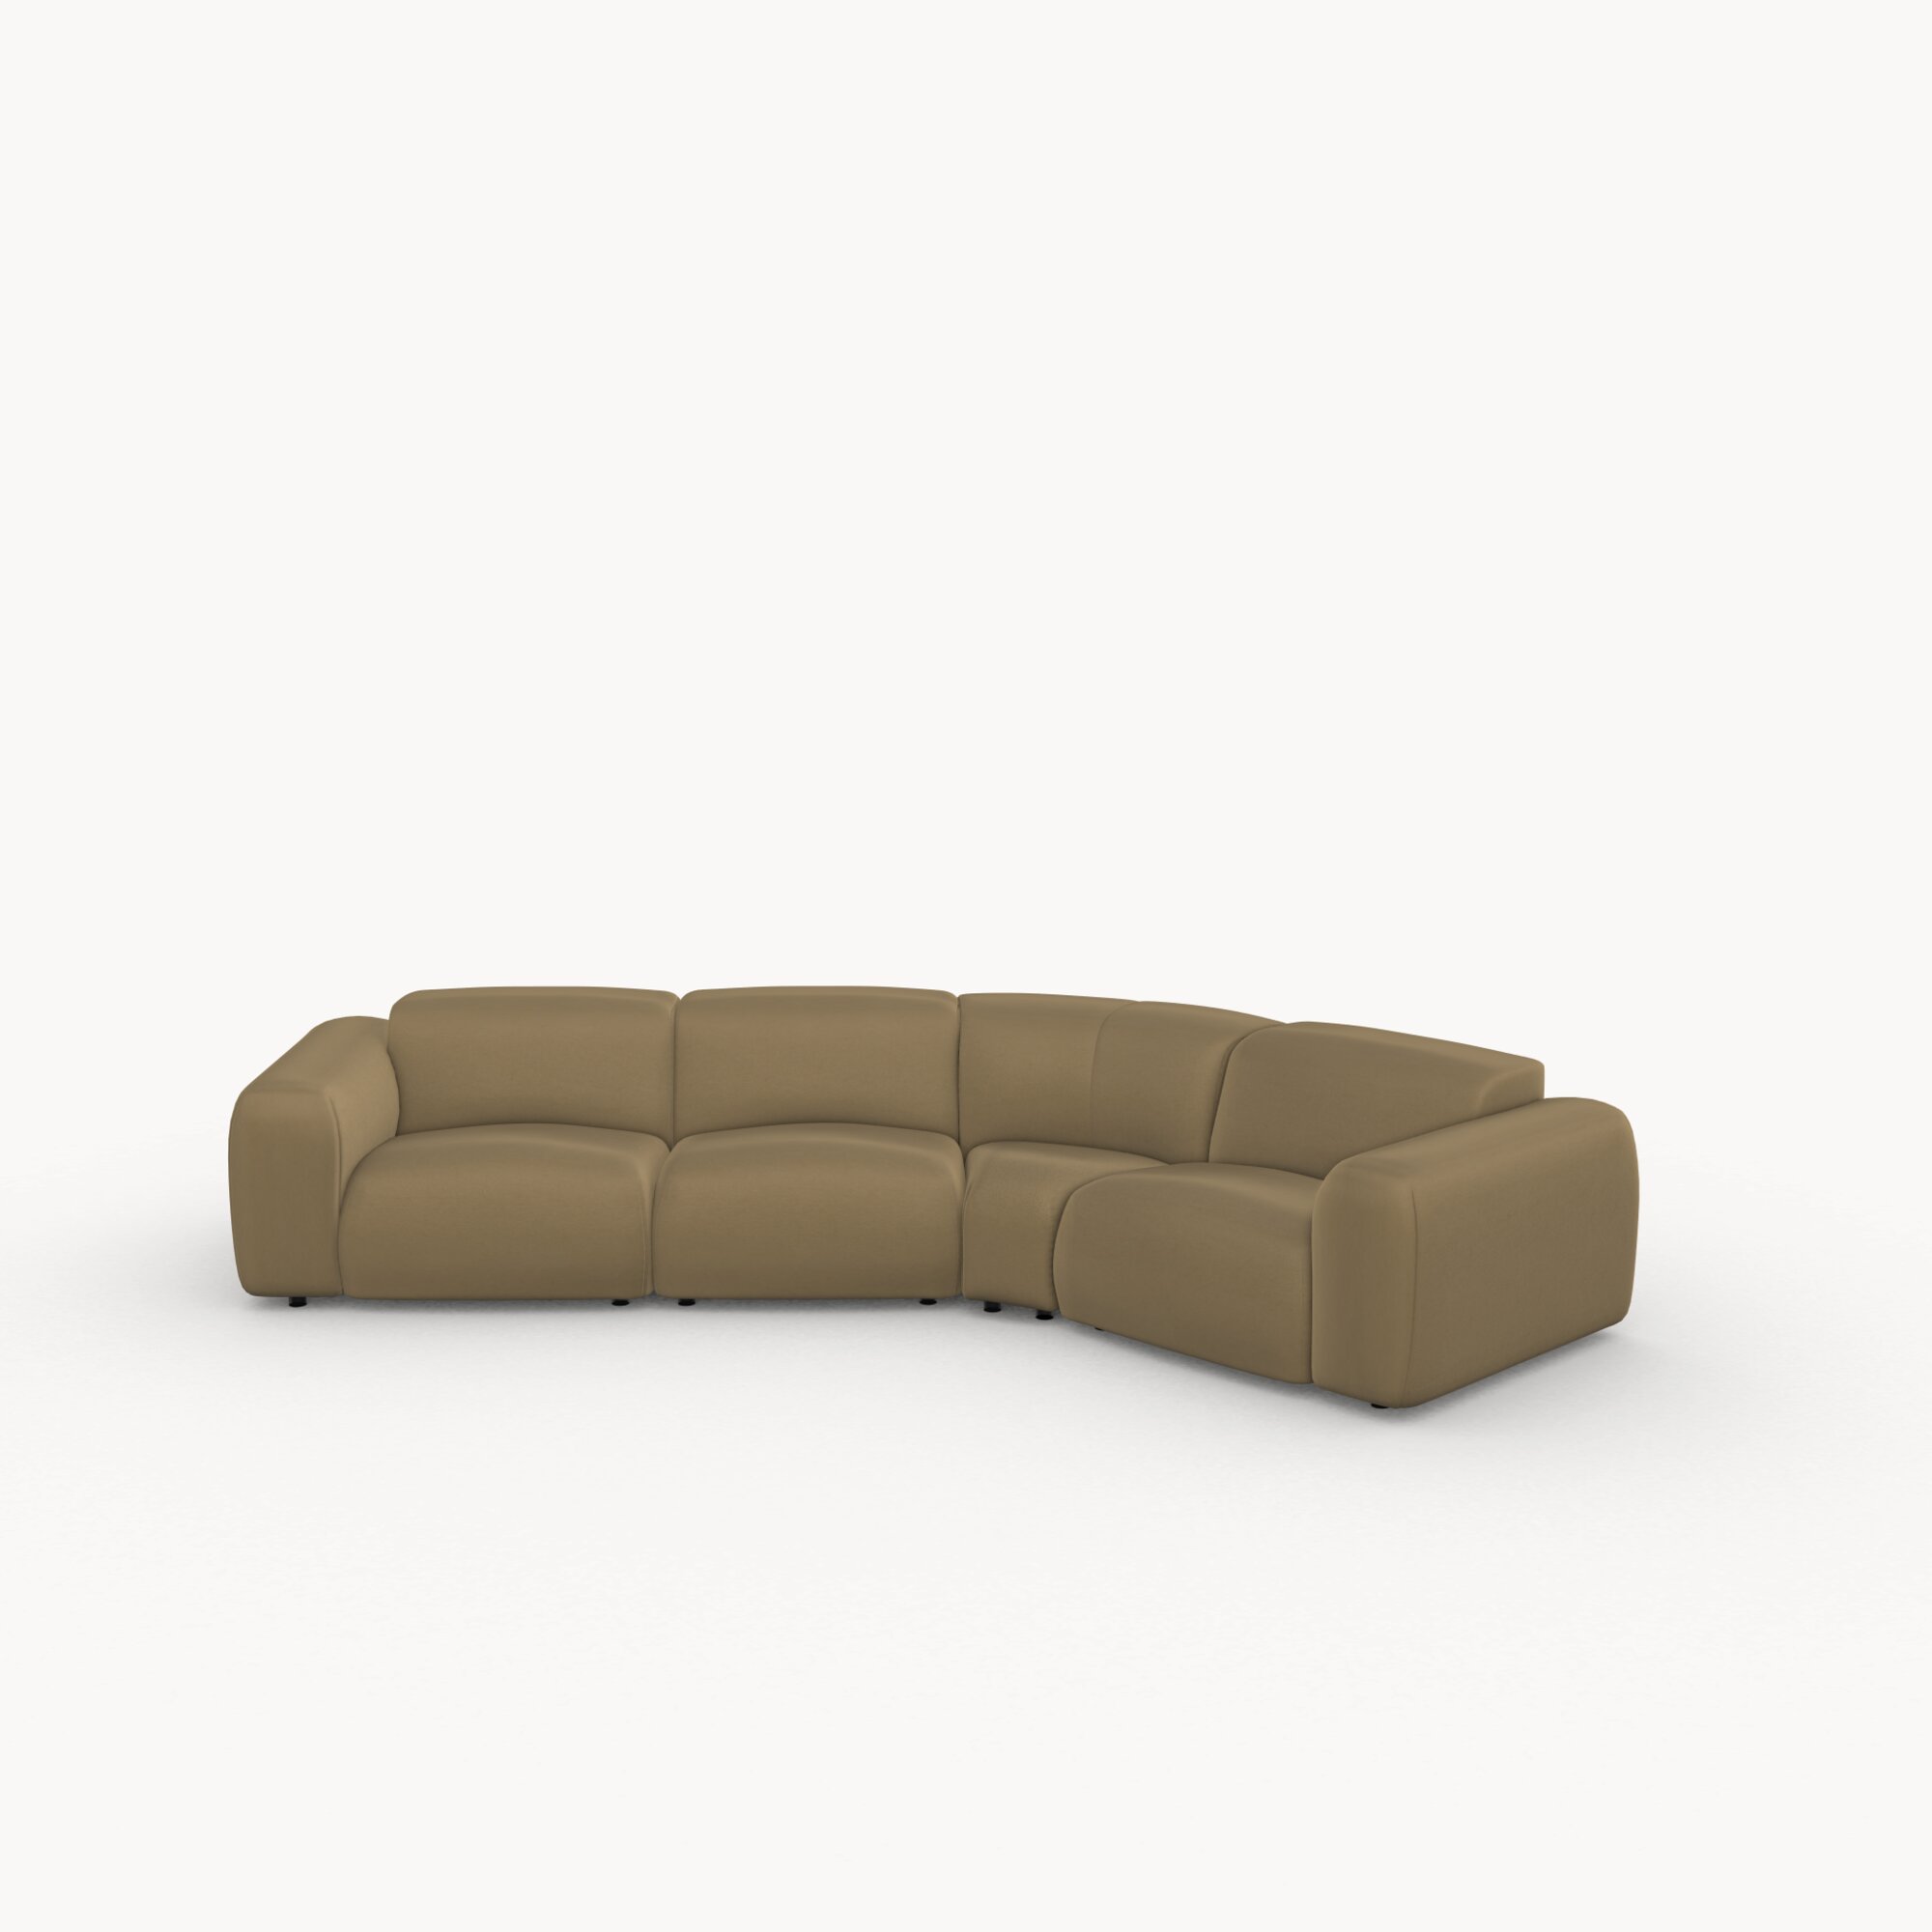 Design modern sofa | Cosy Sofa Corner Element 45 Degrees tonus4 244 | Studio HENK| 